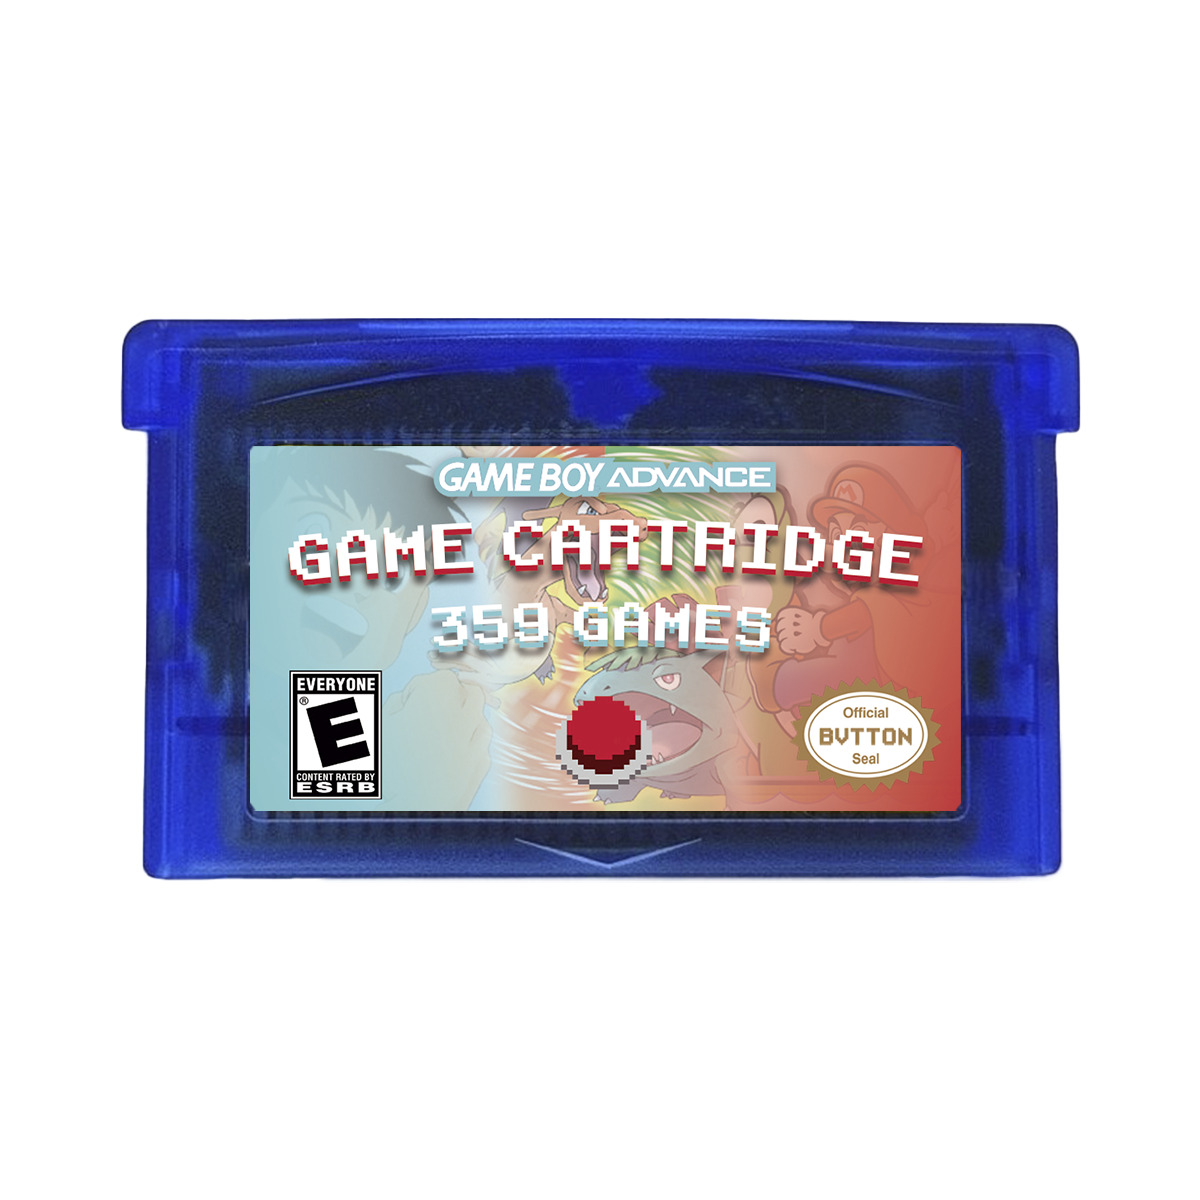 Cartucho Gameboy Advance 359 Juegos GBA Nintendo